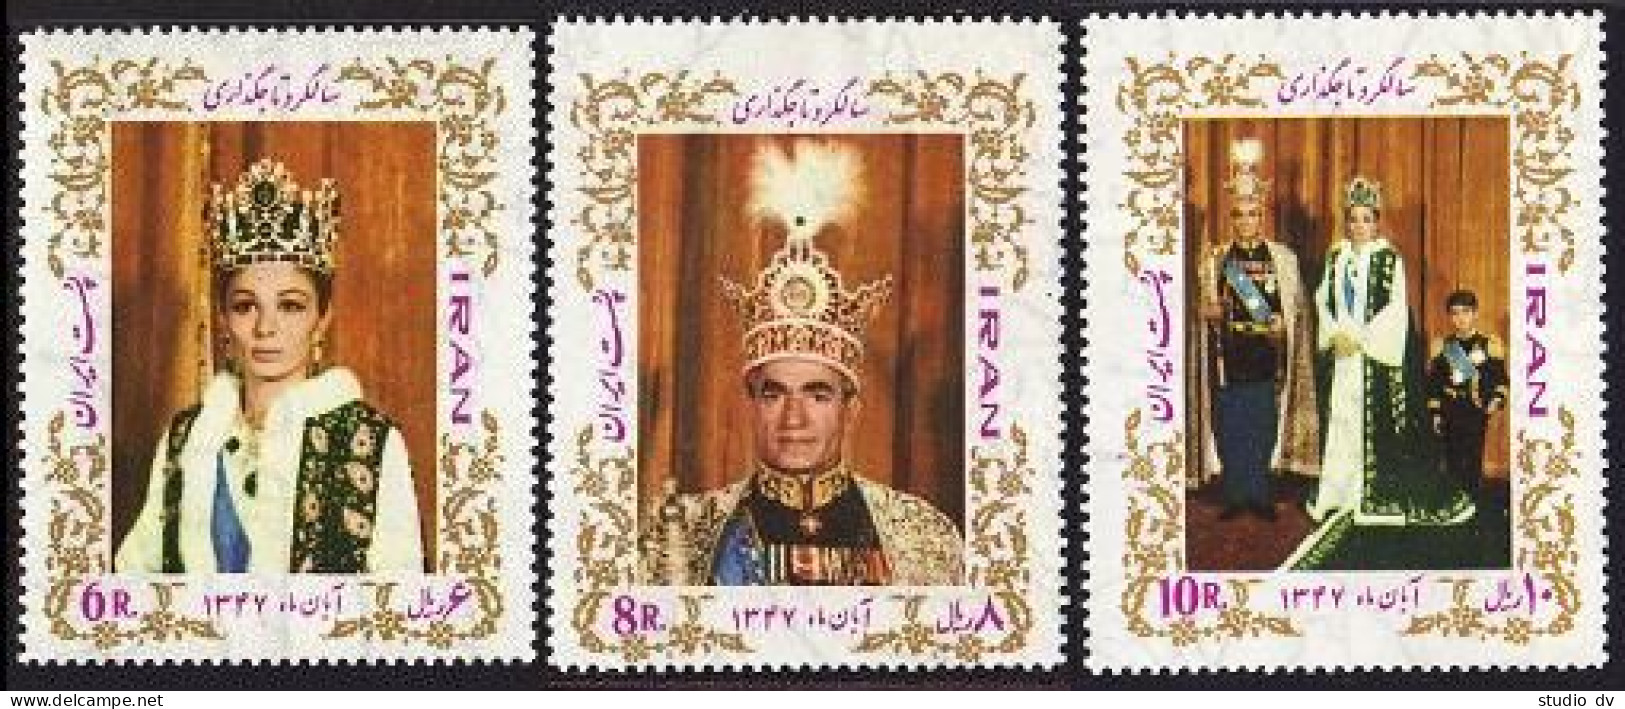 Iran 1488-1490,MNH.Michel 1400-1402. Coronation Of Shah Riza Pahlavi,Farah,1968. - Iran